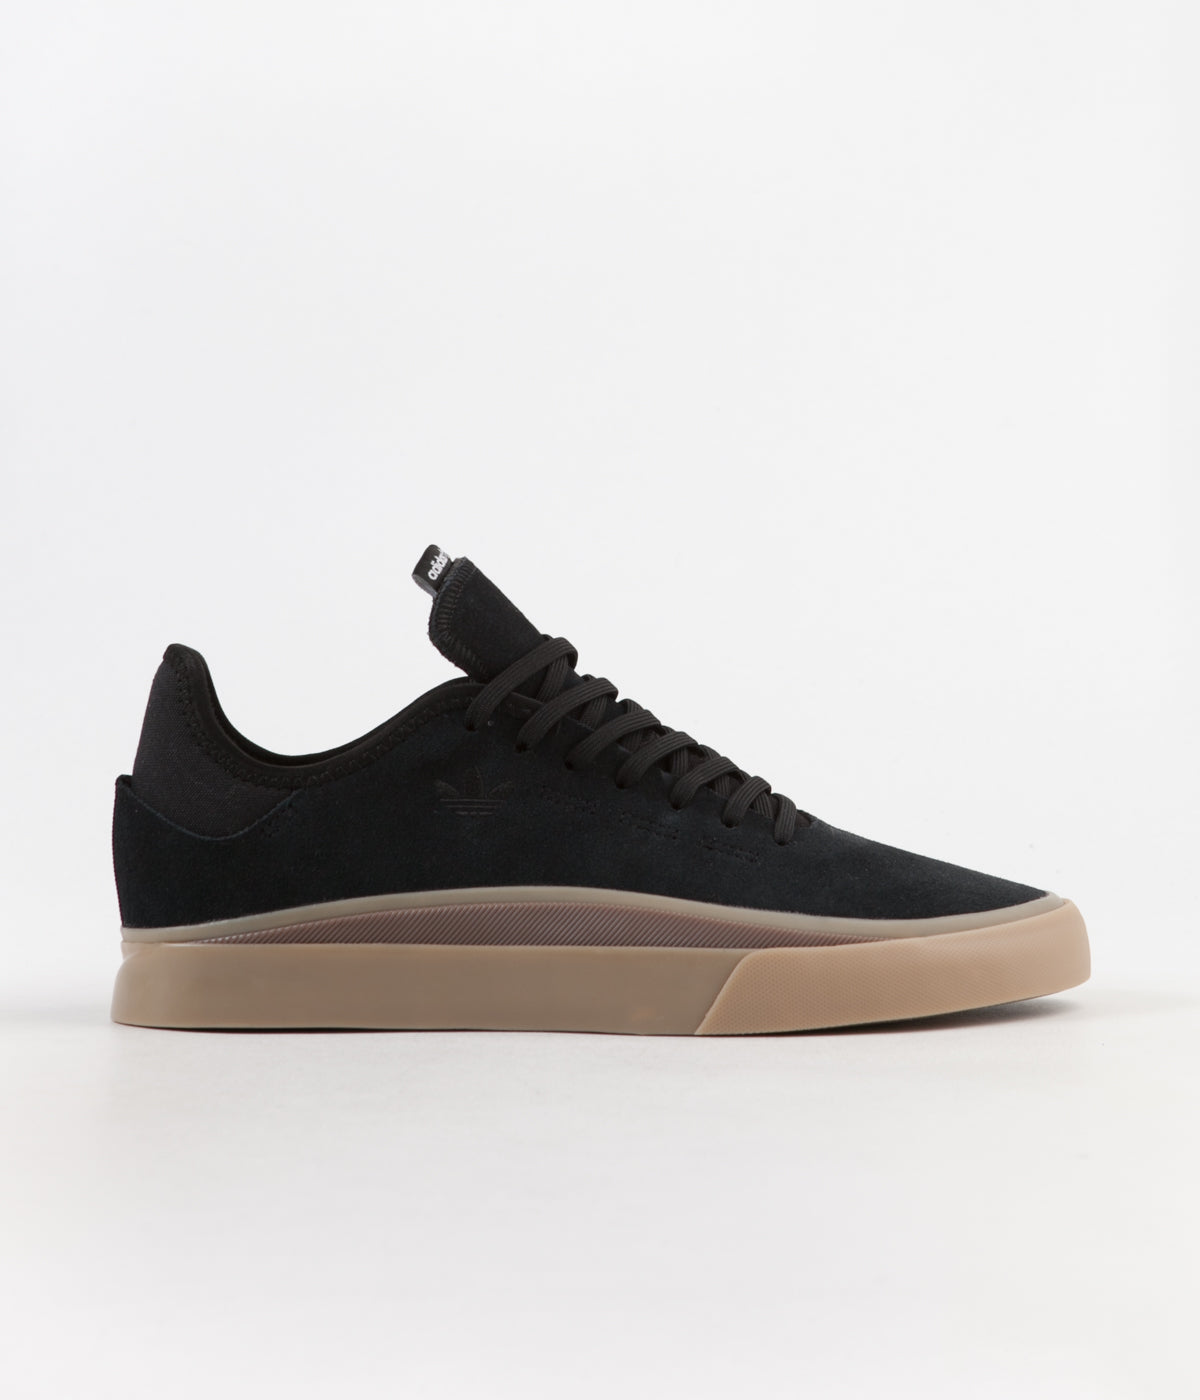 Adidas Shoes - Black / Gum4 / Gum5 |